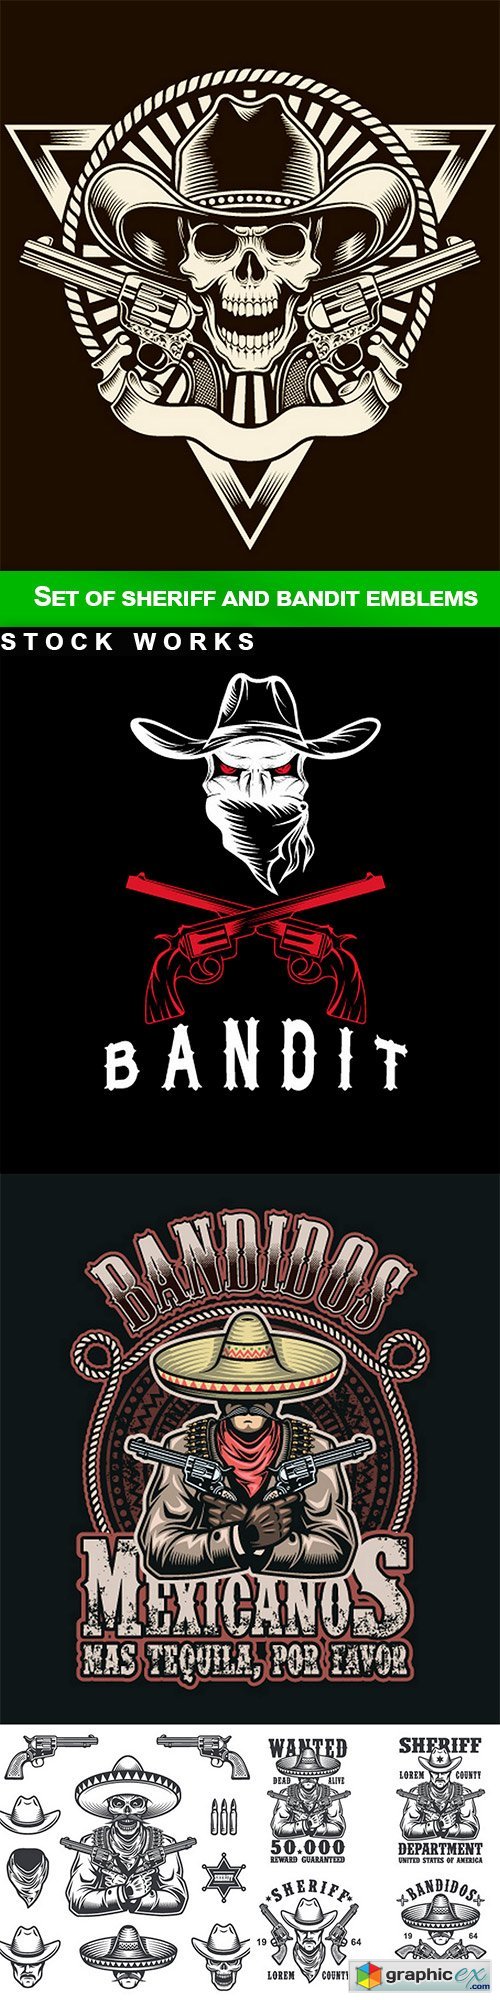 Set of sheriff and bandit emblems - 5 EPS